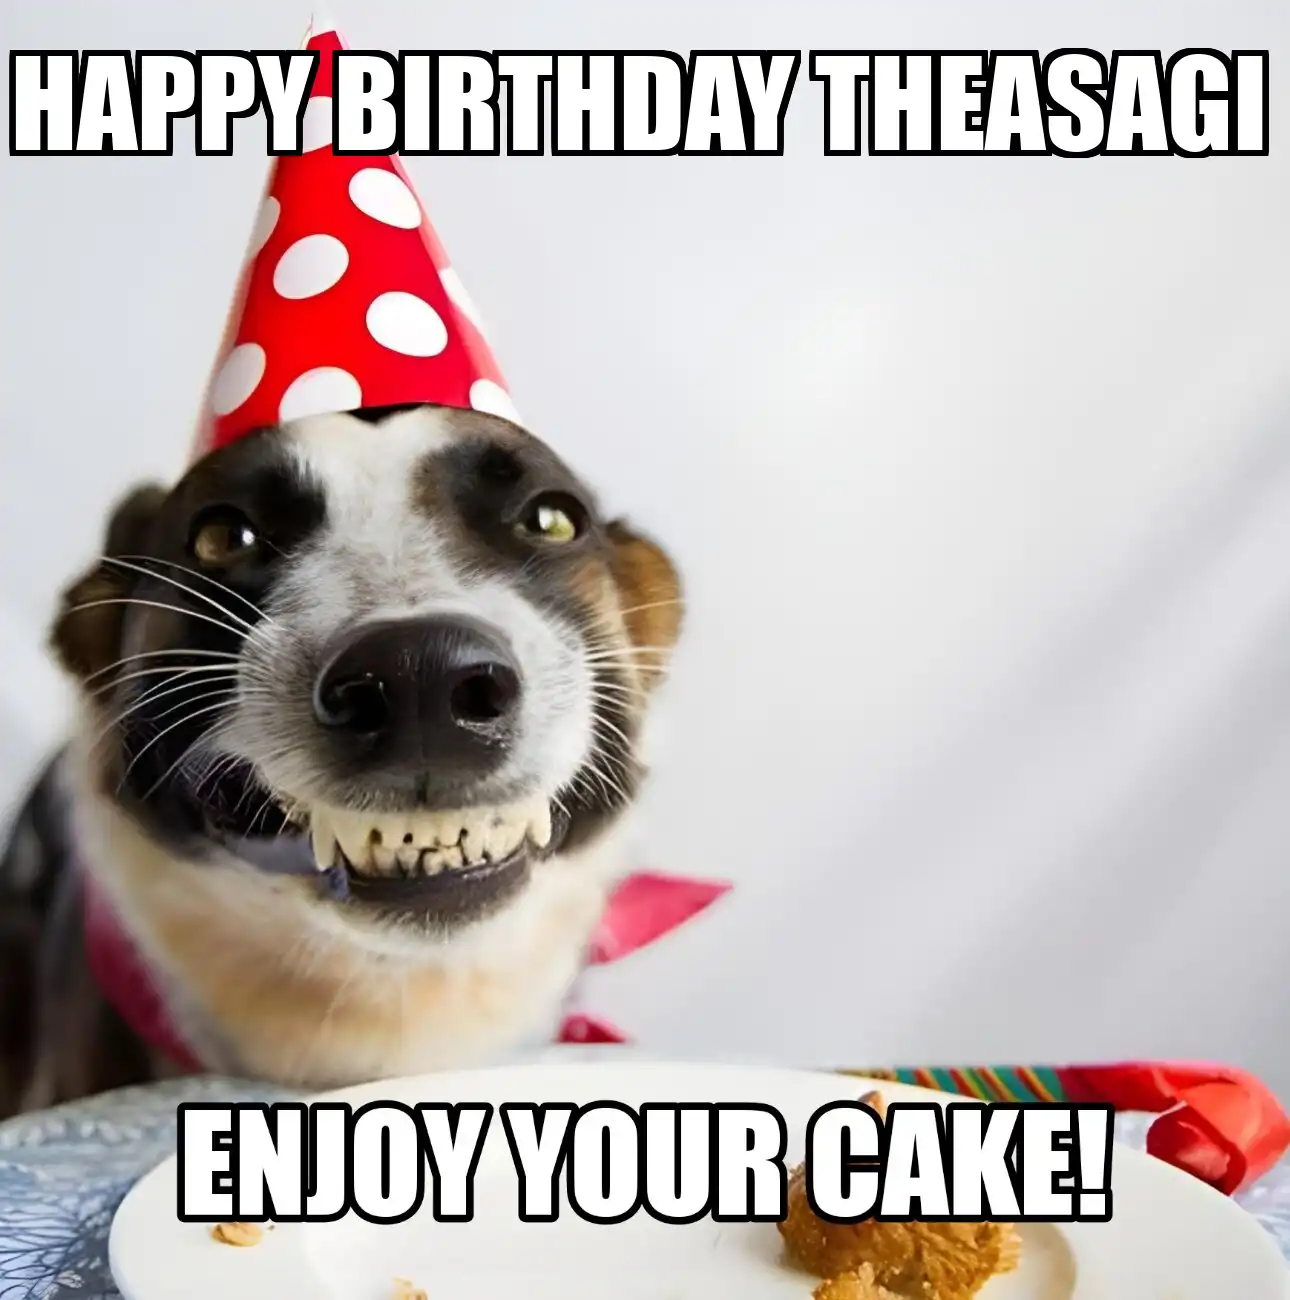 Happy Birthday Theasagi Enjoy Your Cake Dog Meme